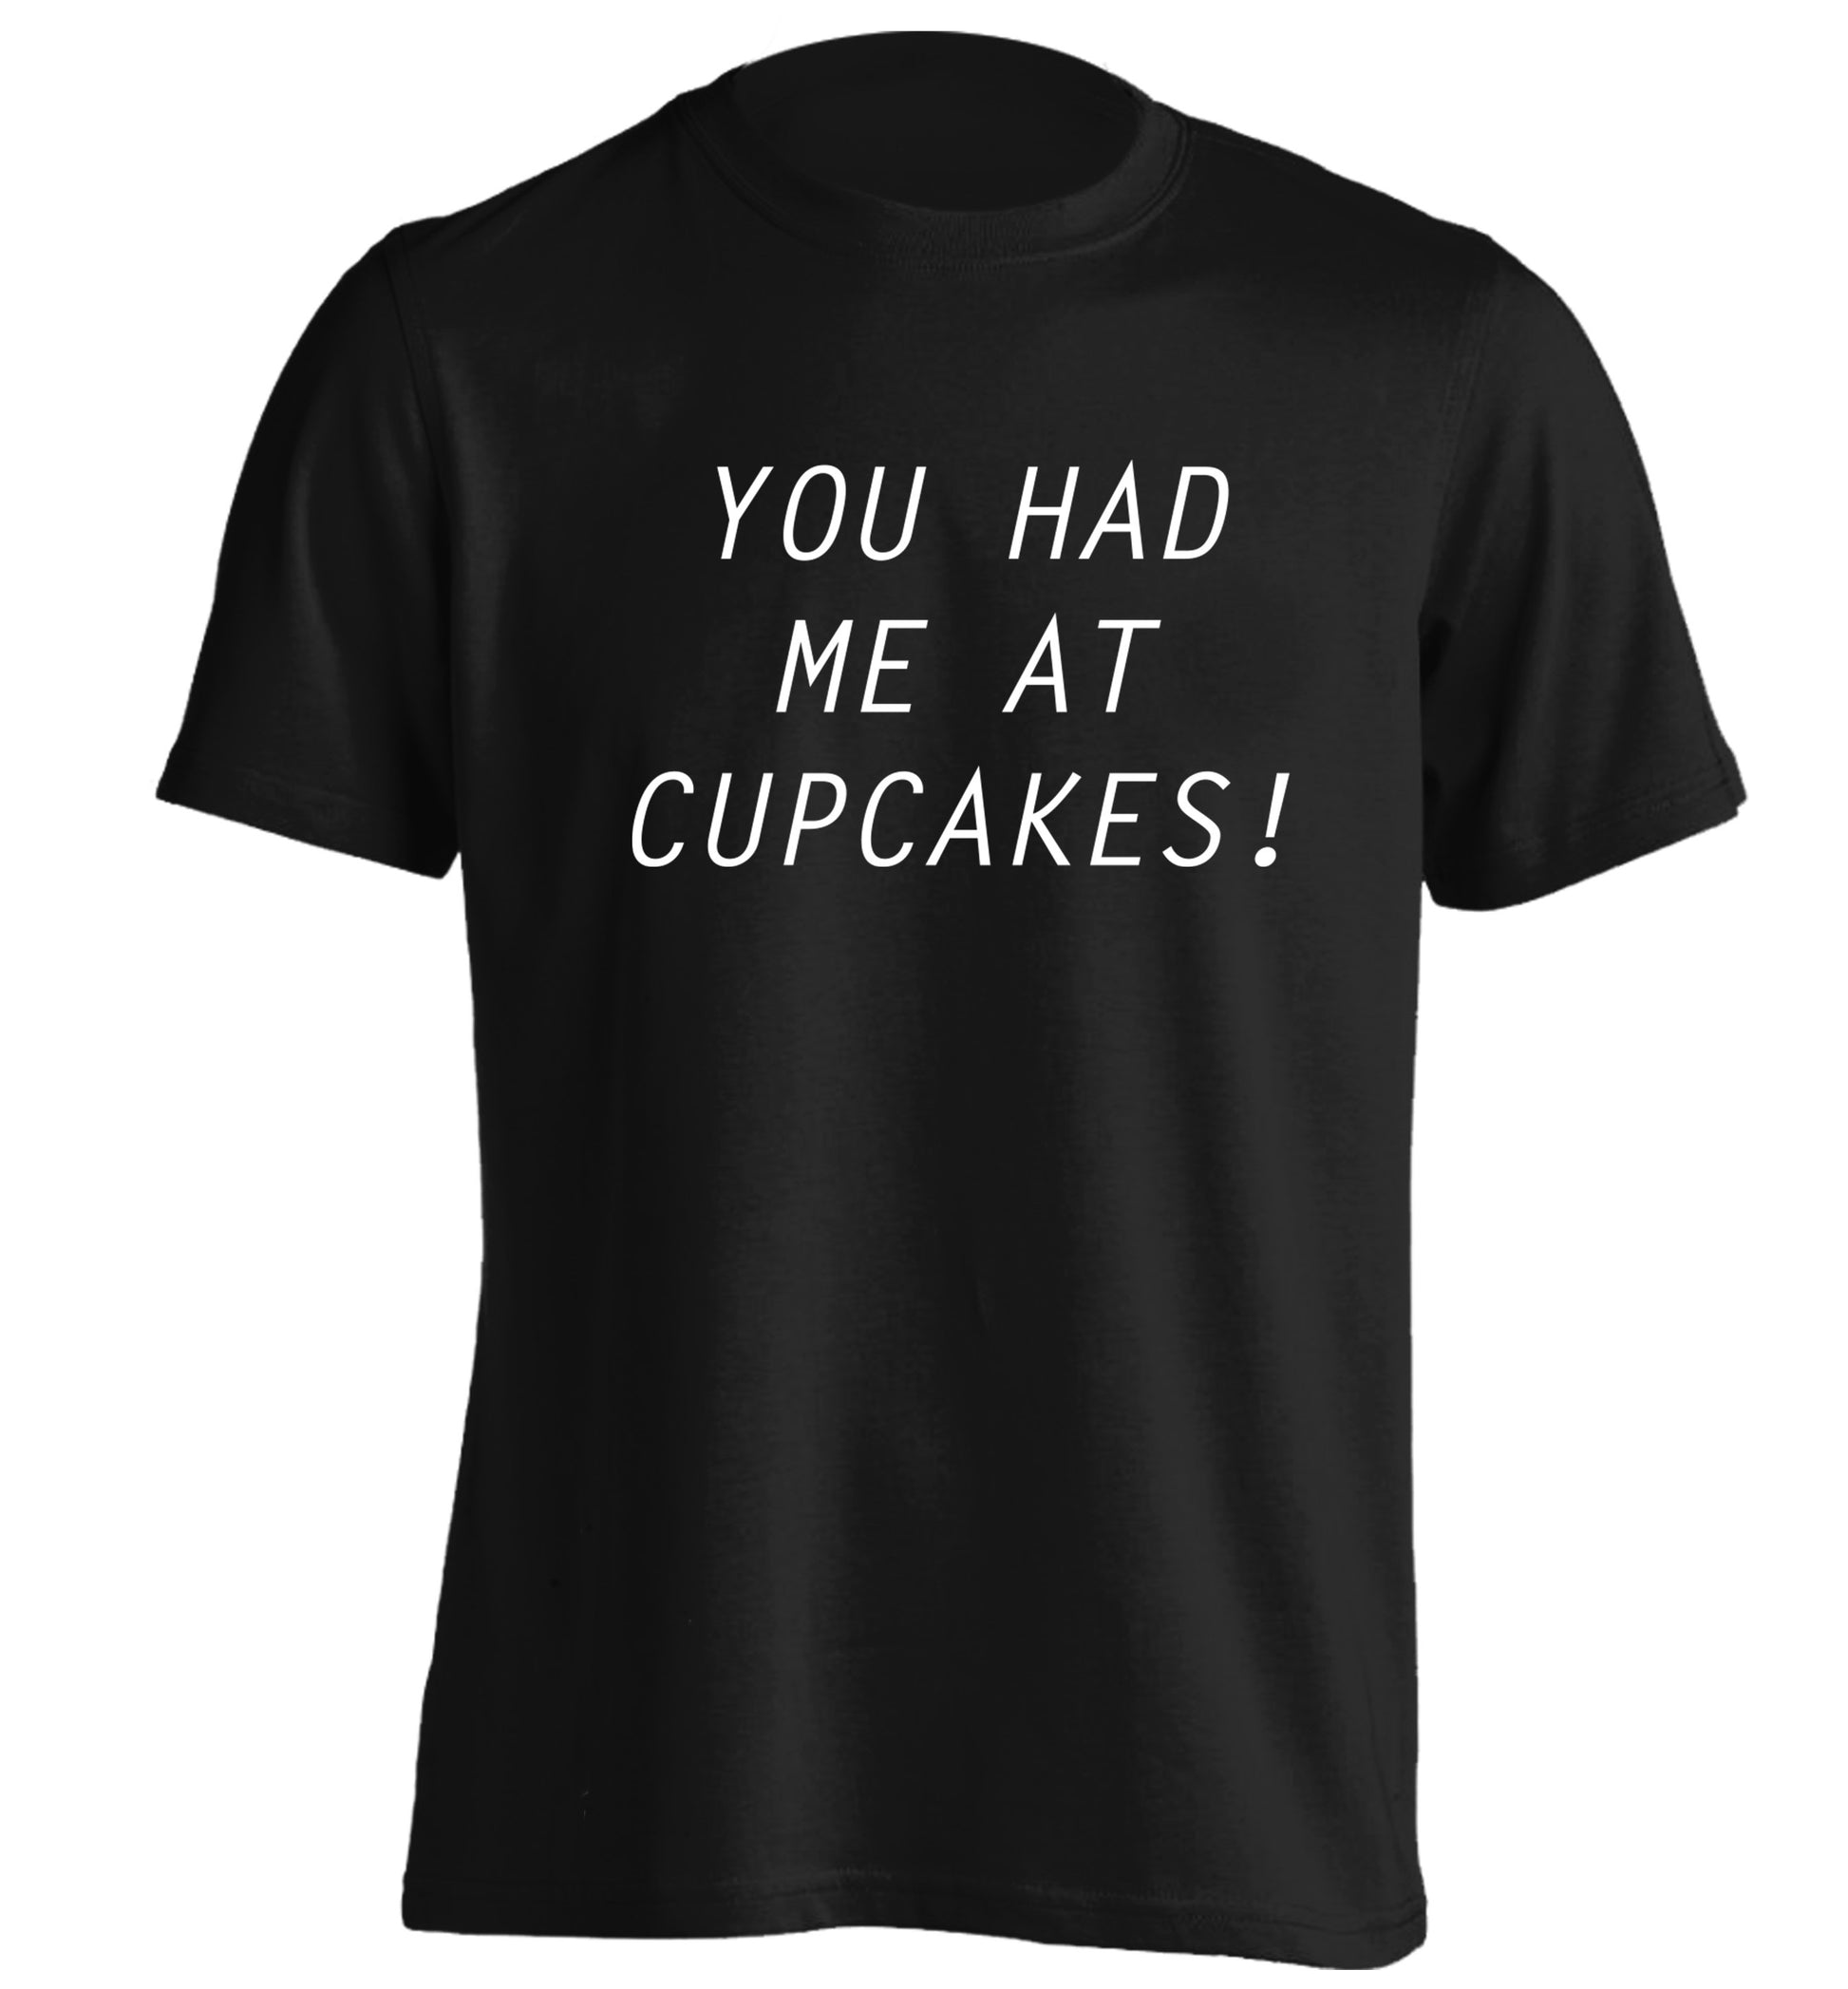 You had me at cupcakes adults unisex black Tshirt 2XL